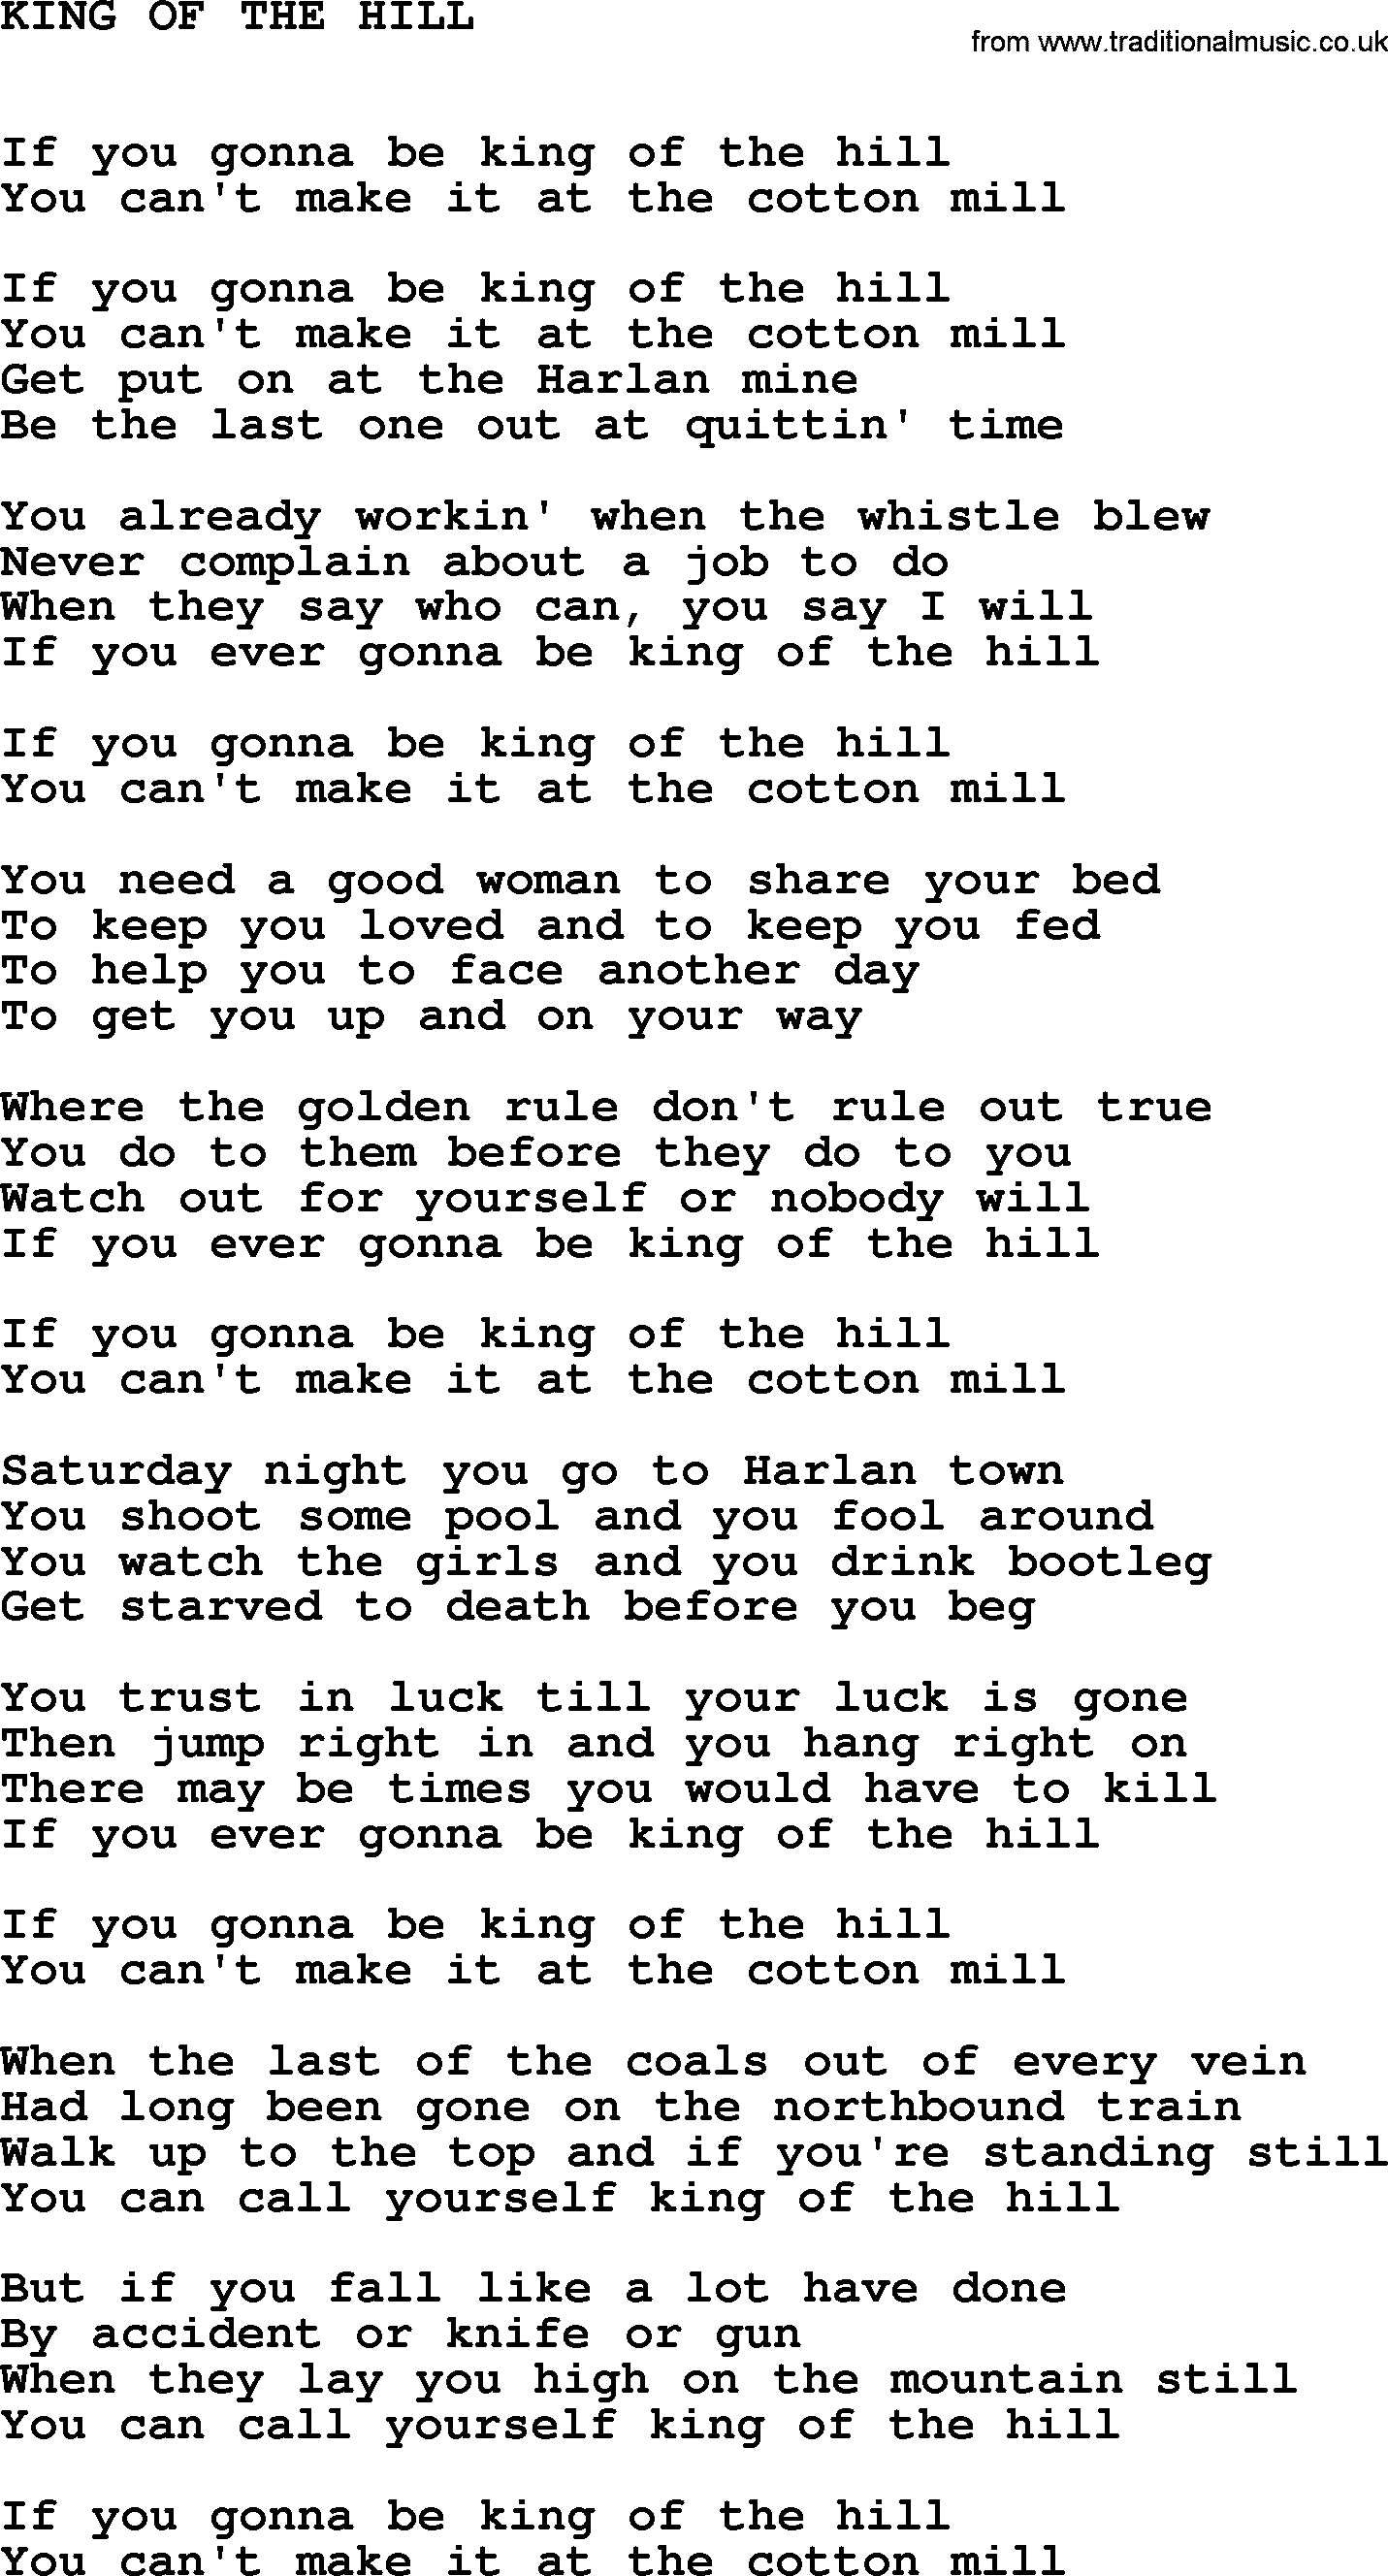 Johnny Cash song King Of The Hill.txt lyrics